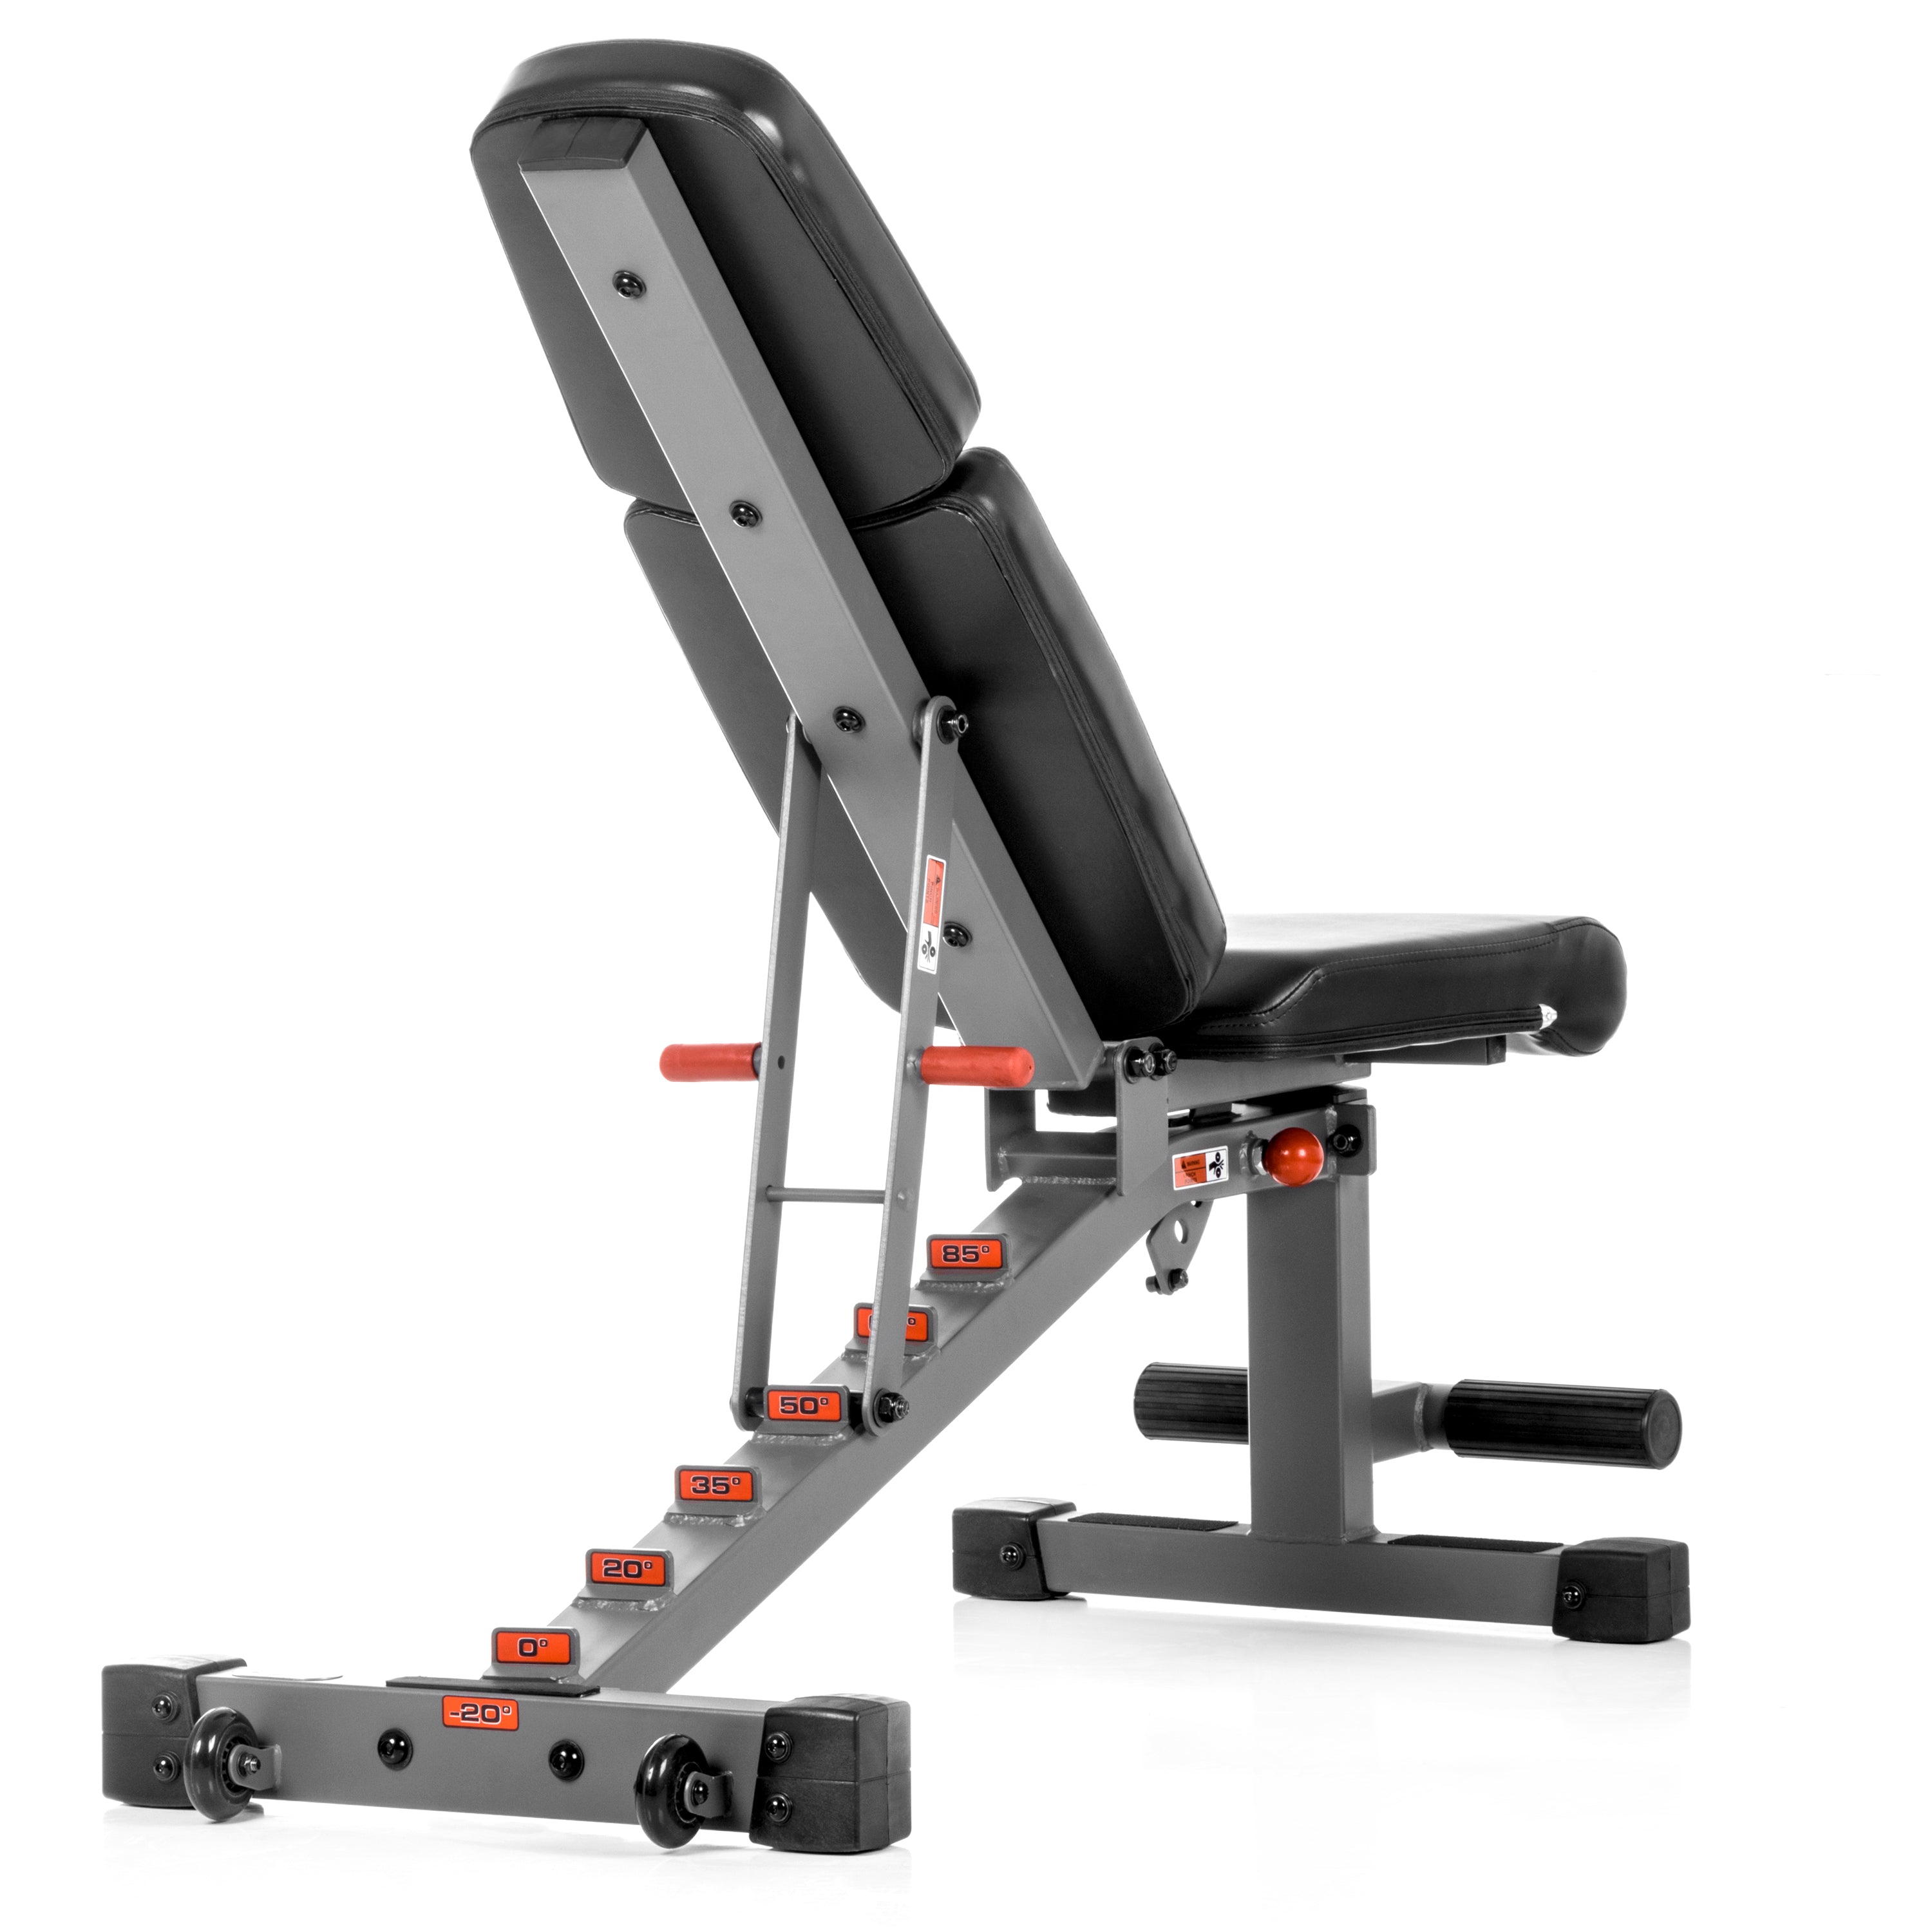 Darcon Hip Thrust Machine - Weight Bench Home Workout Equipment for Women-Men  45-180 lbs 49x20 x22 